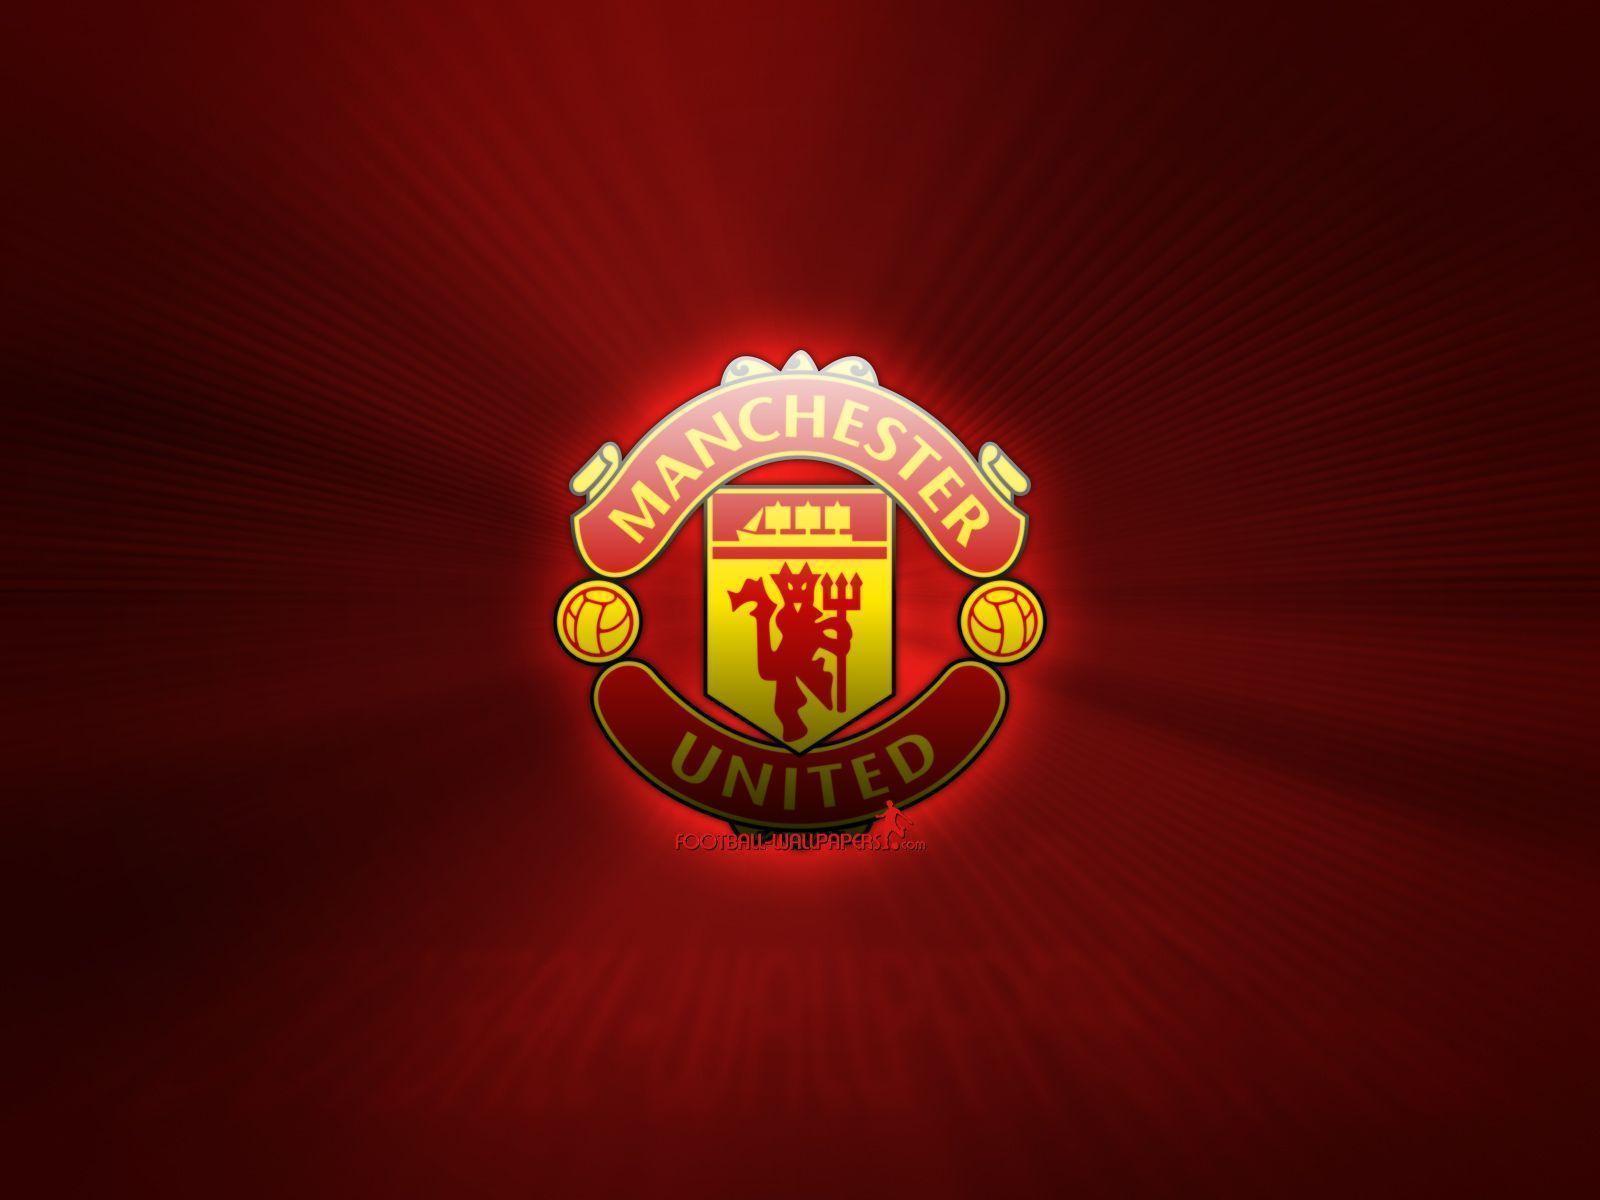 Manchester united logo s on